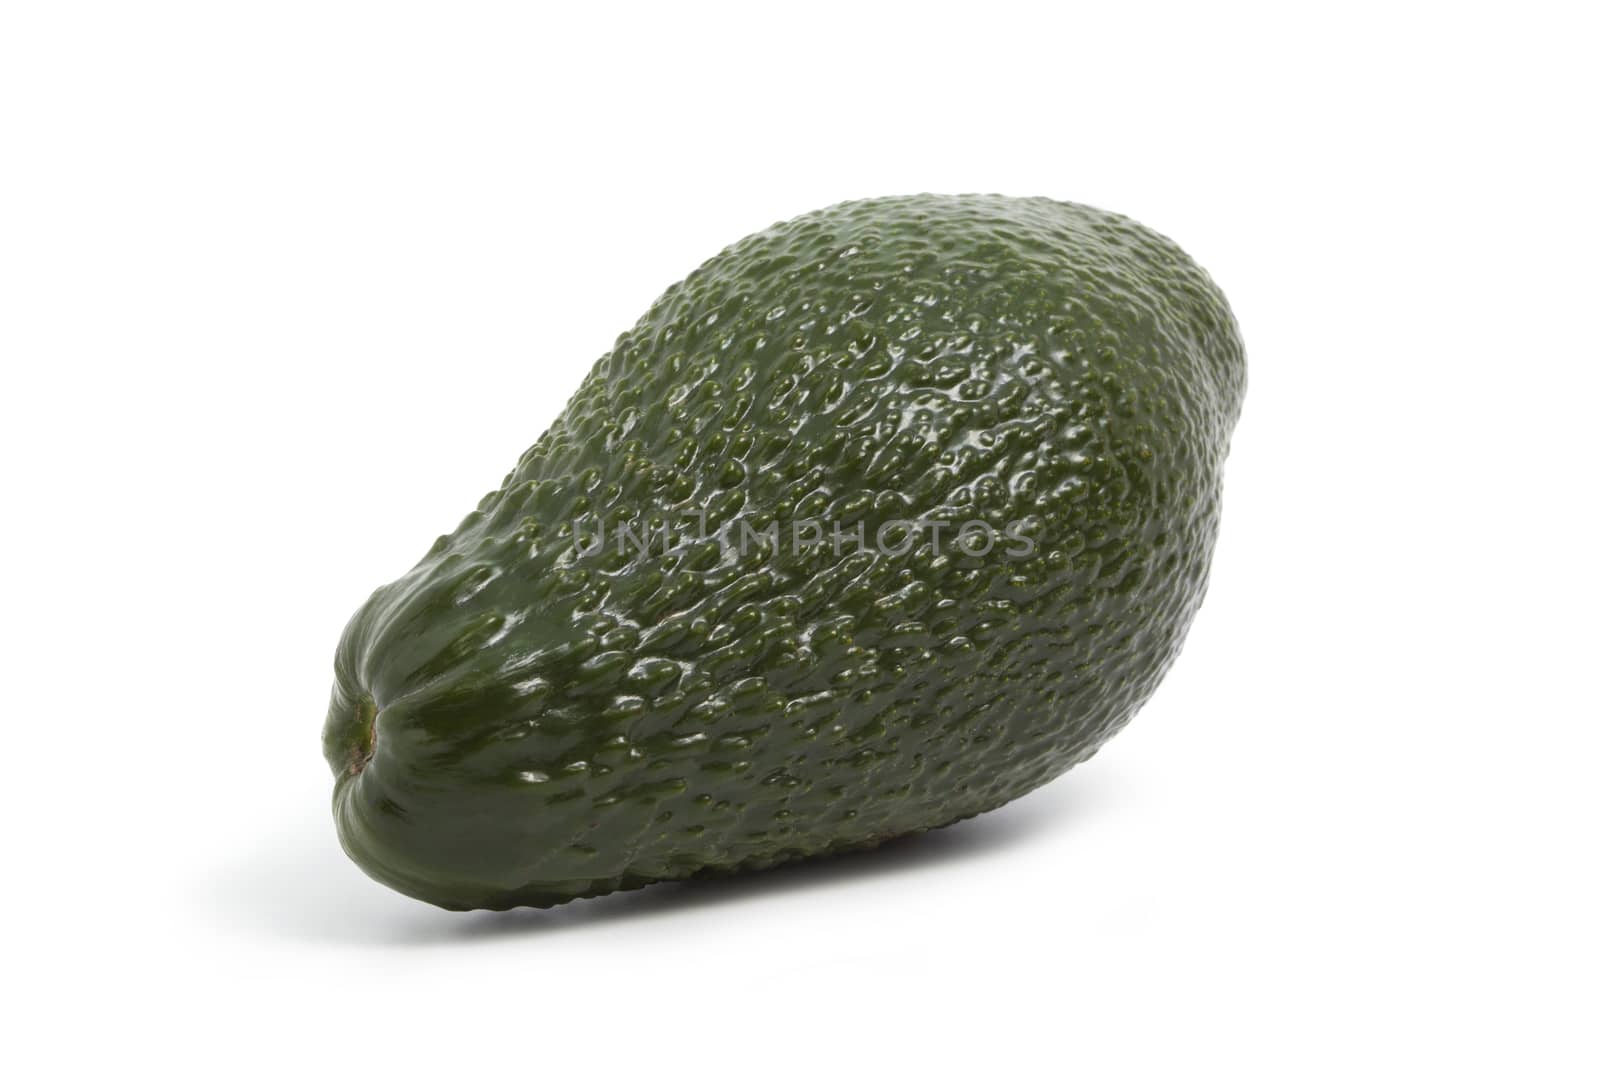 avocado on a white background by Olvita